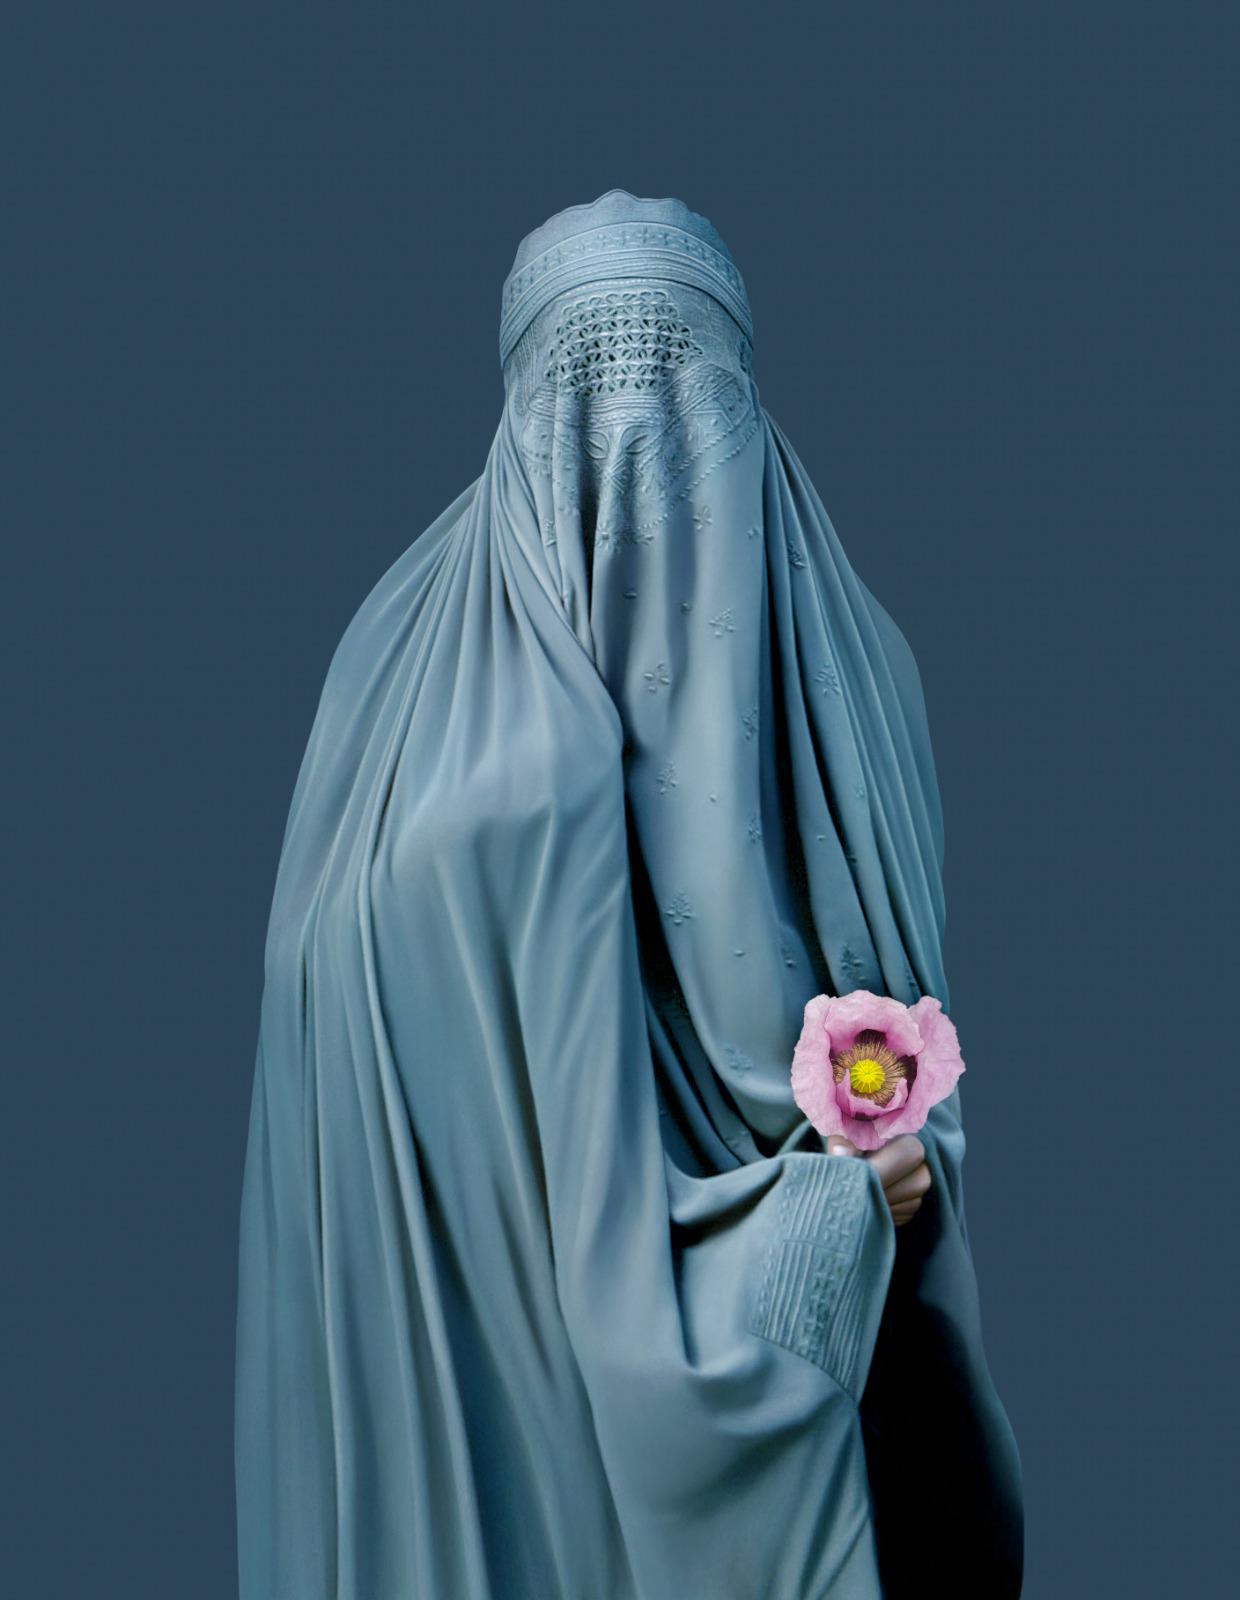 Arab woman with opium flower